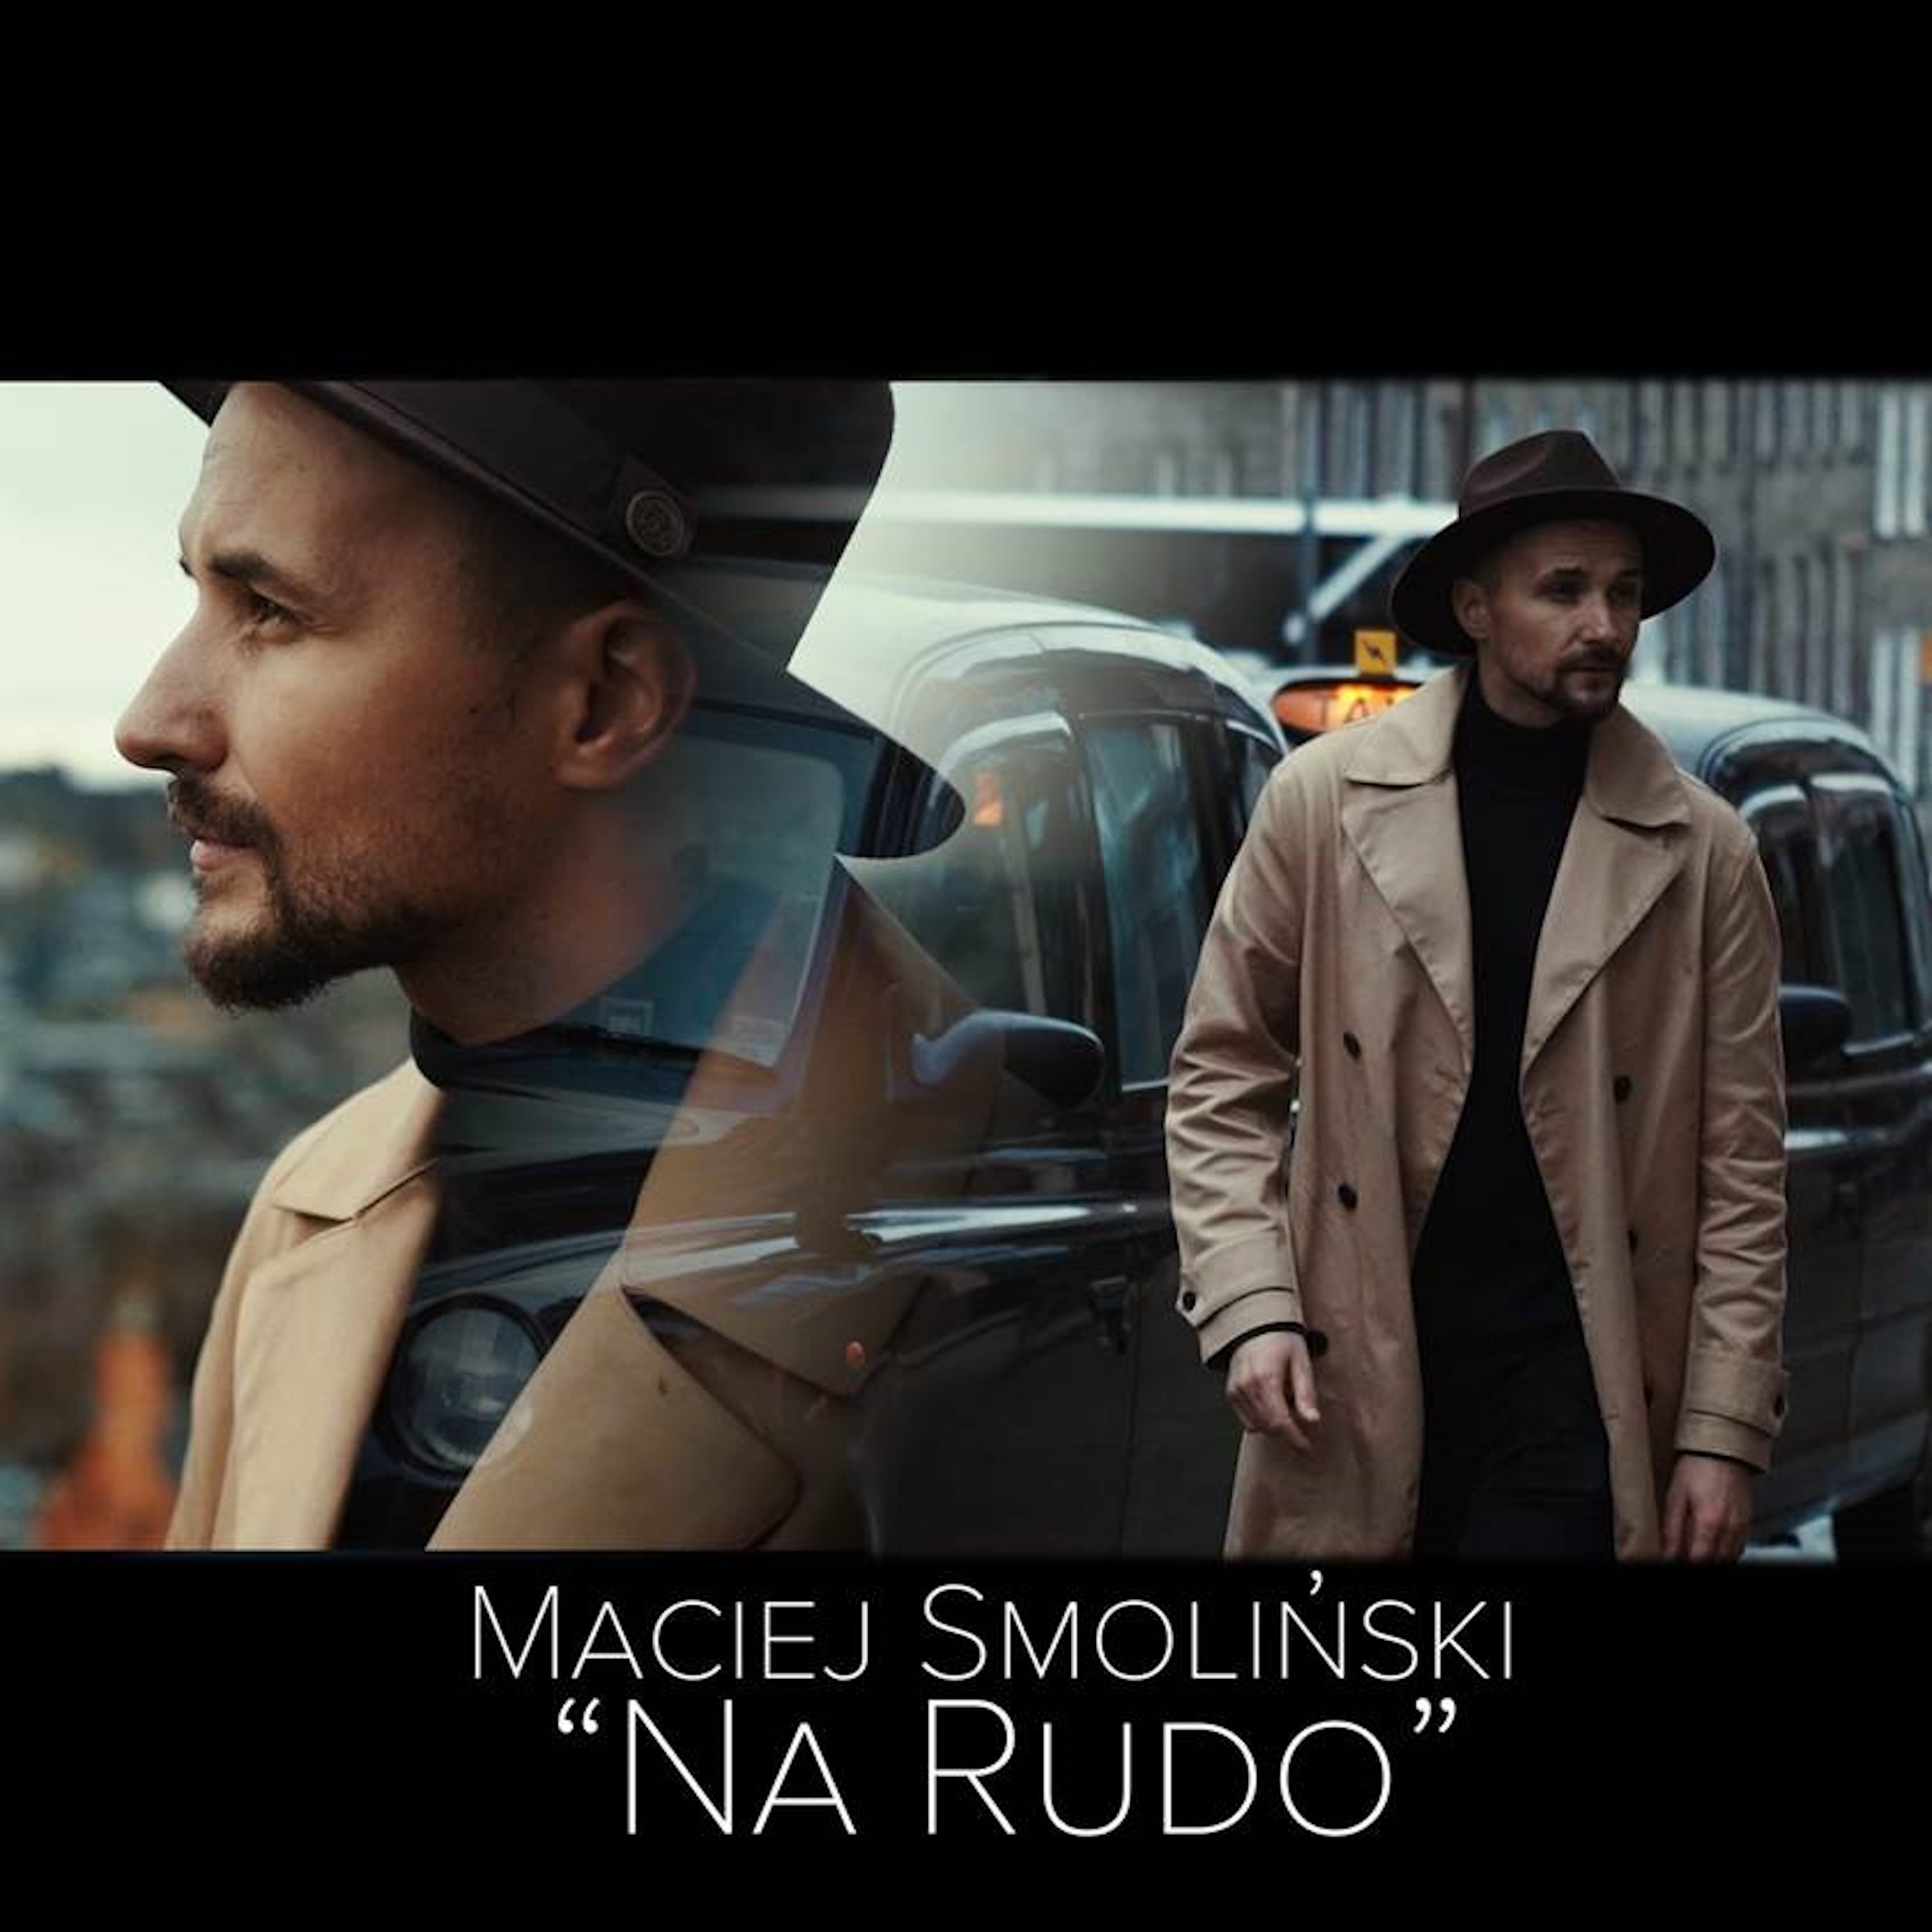 Maciej Smoliński - Na rudo